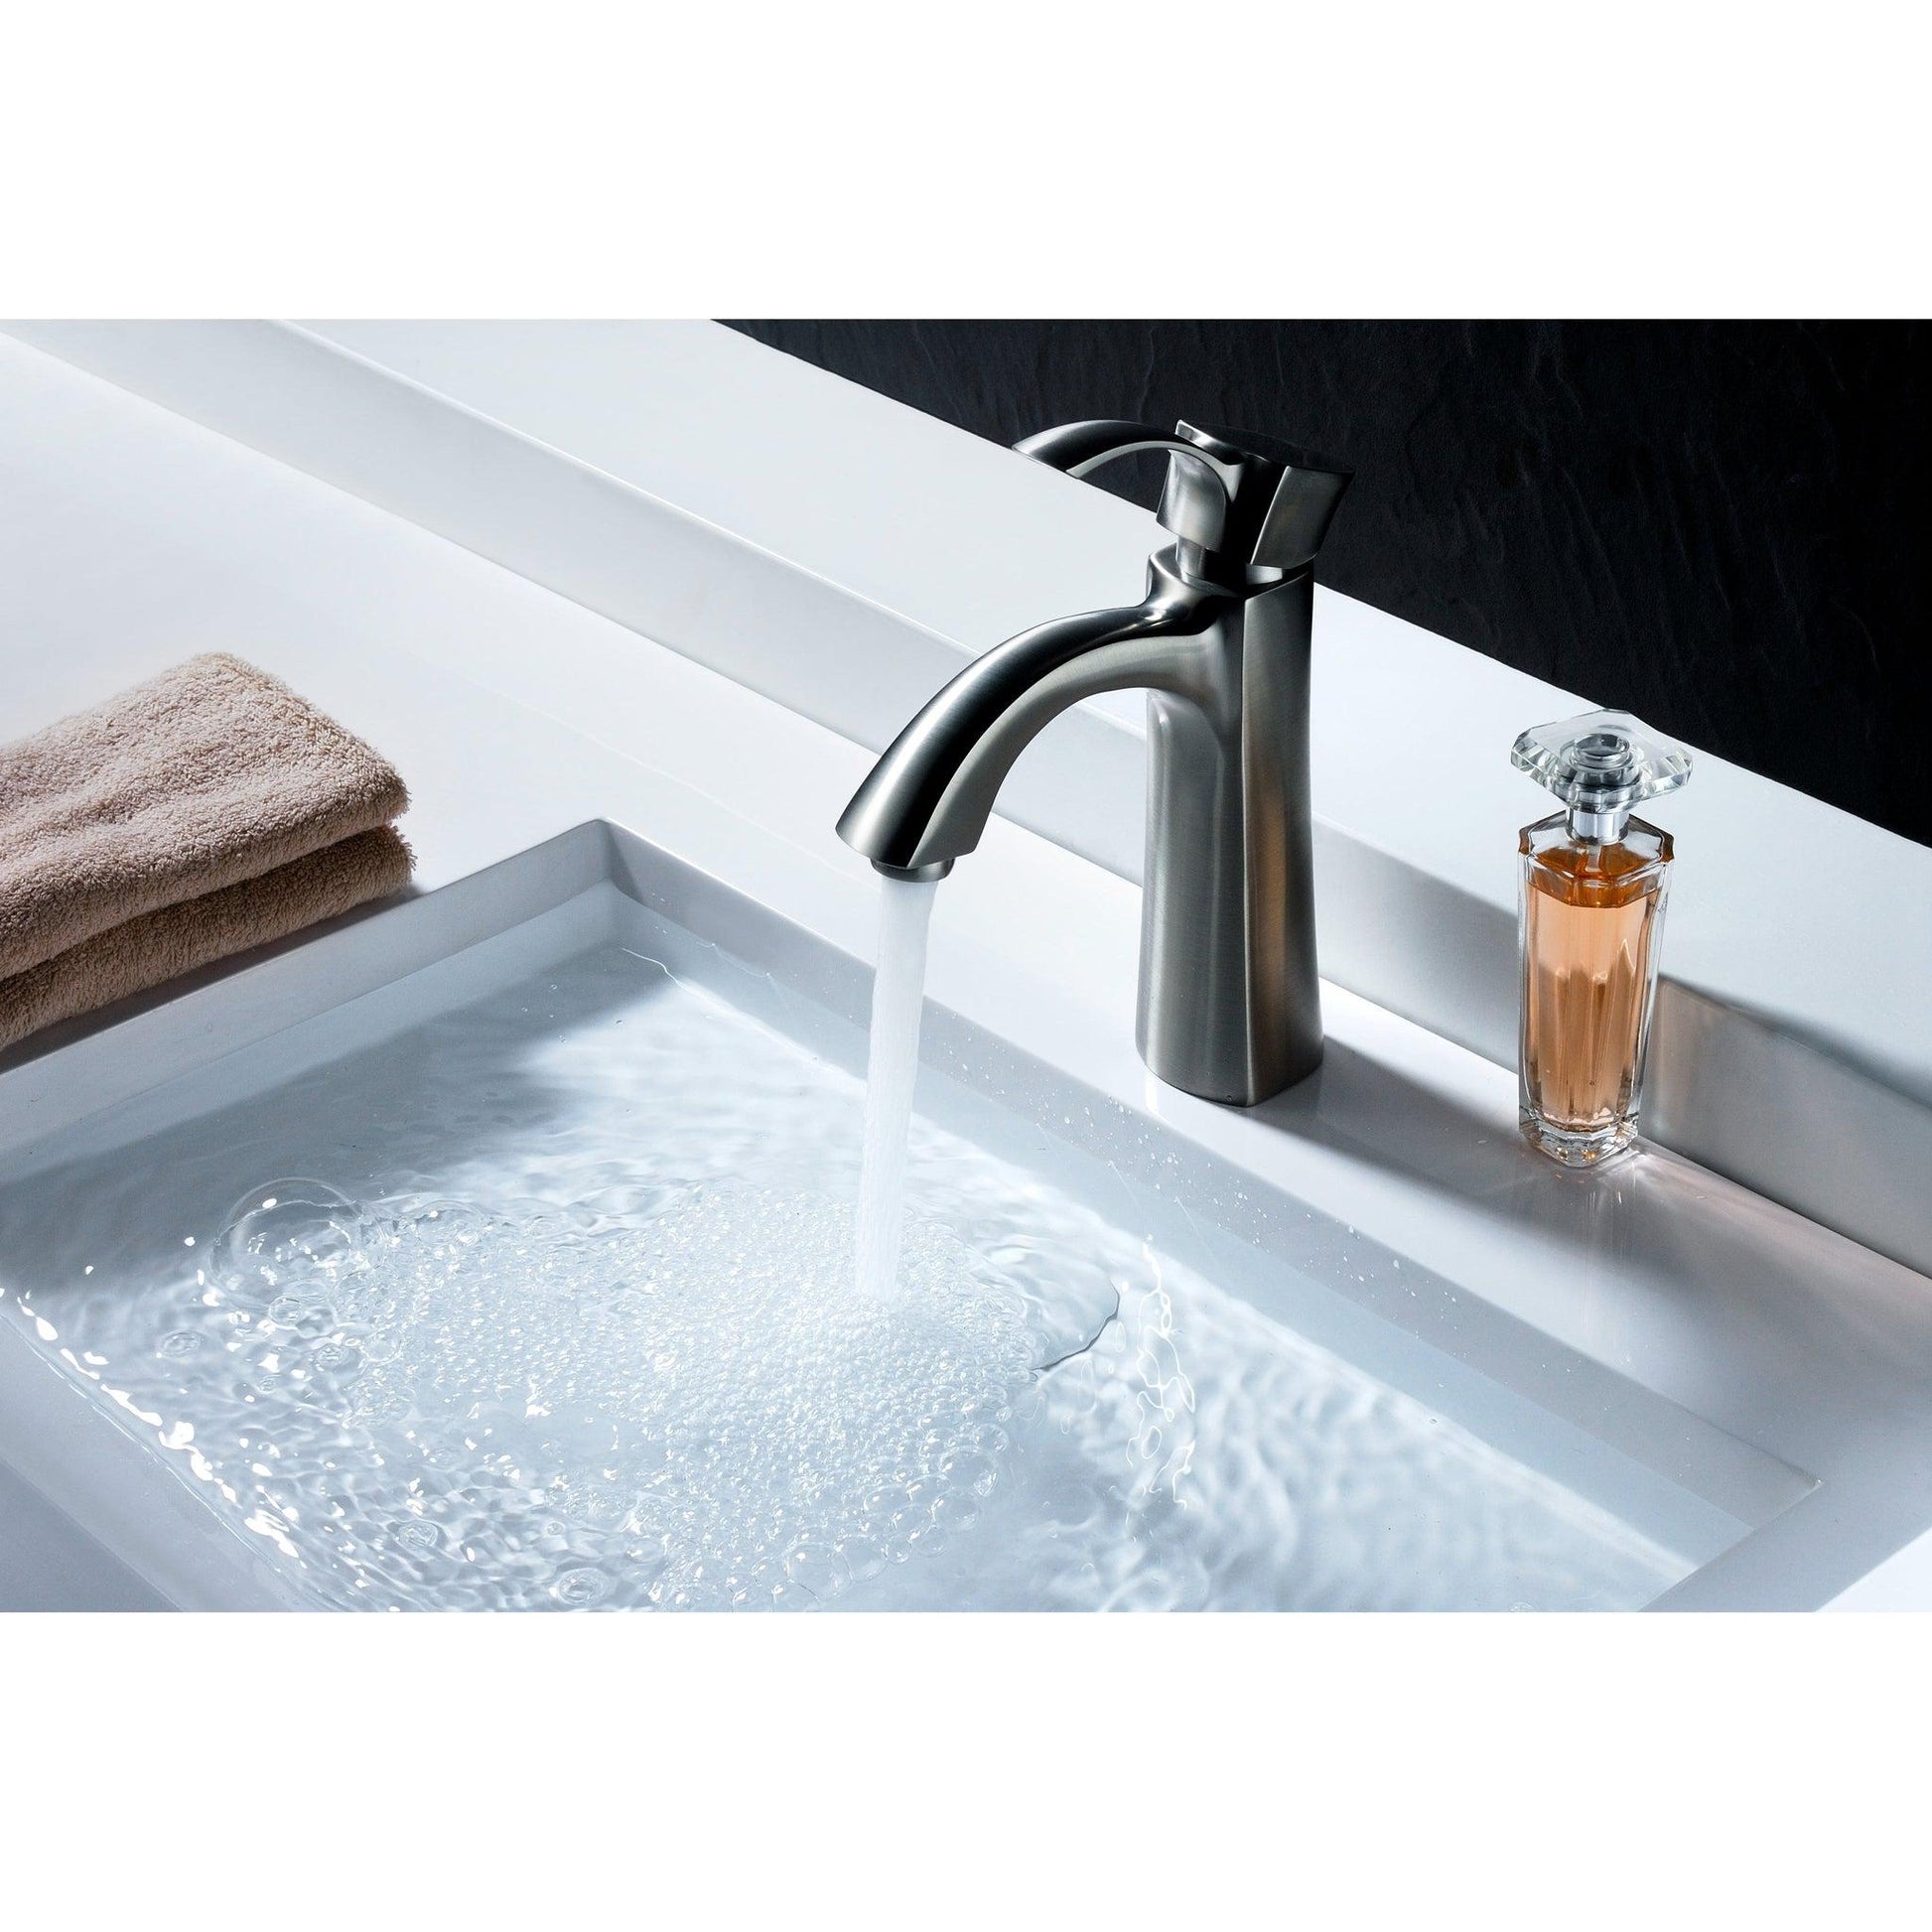 ANZZI Rhythm Series 5" Single Hole Brushed Nickel Mid-Arc Bathroom Sink Faucet